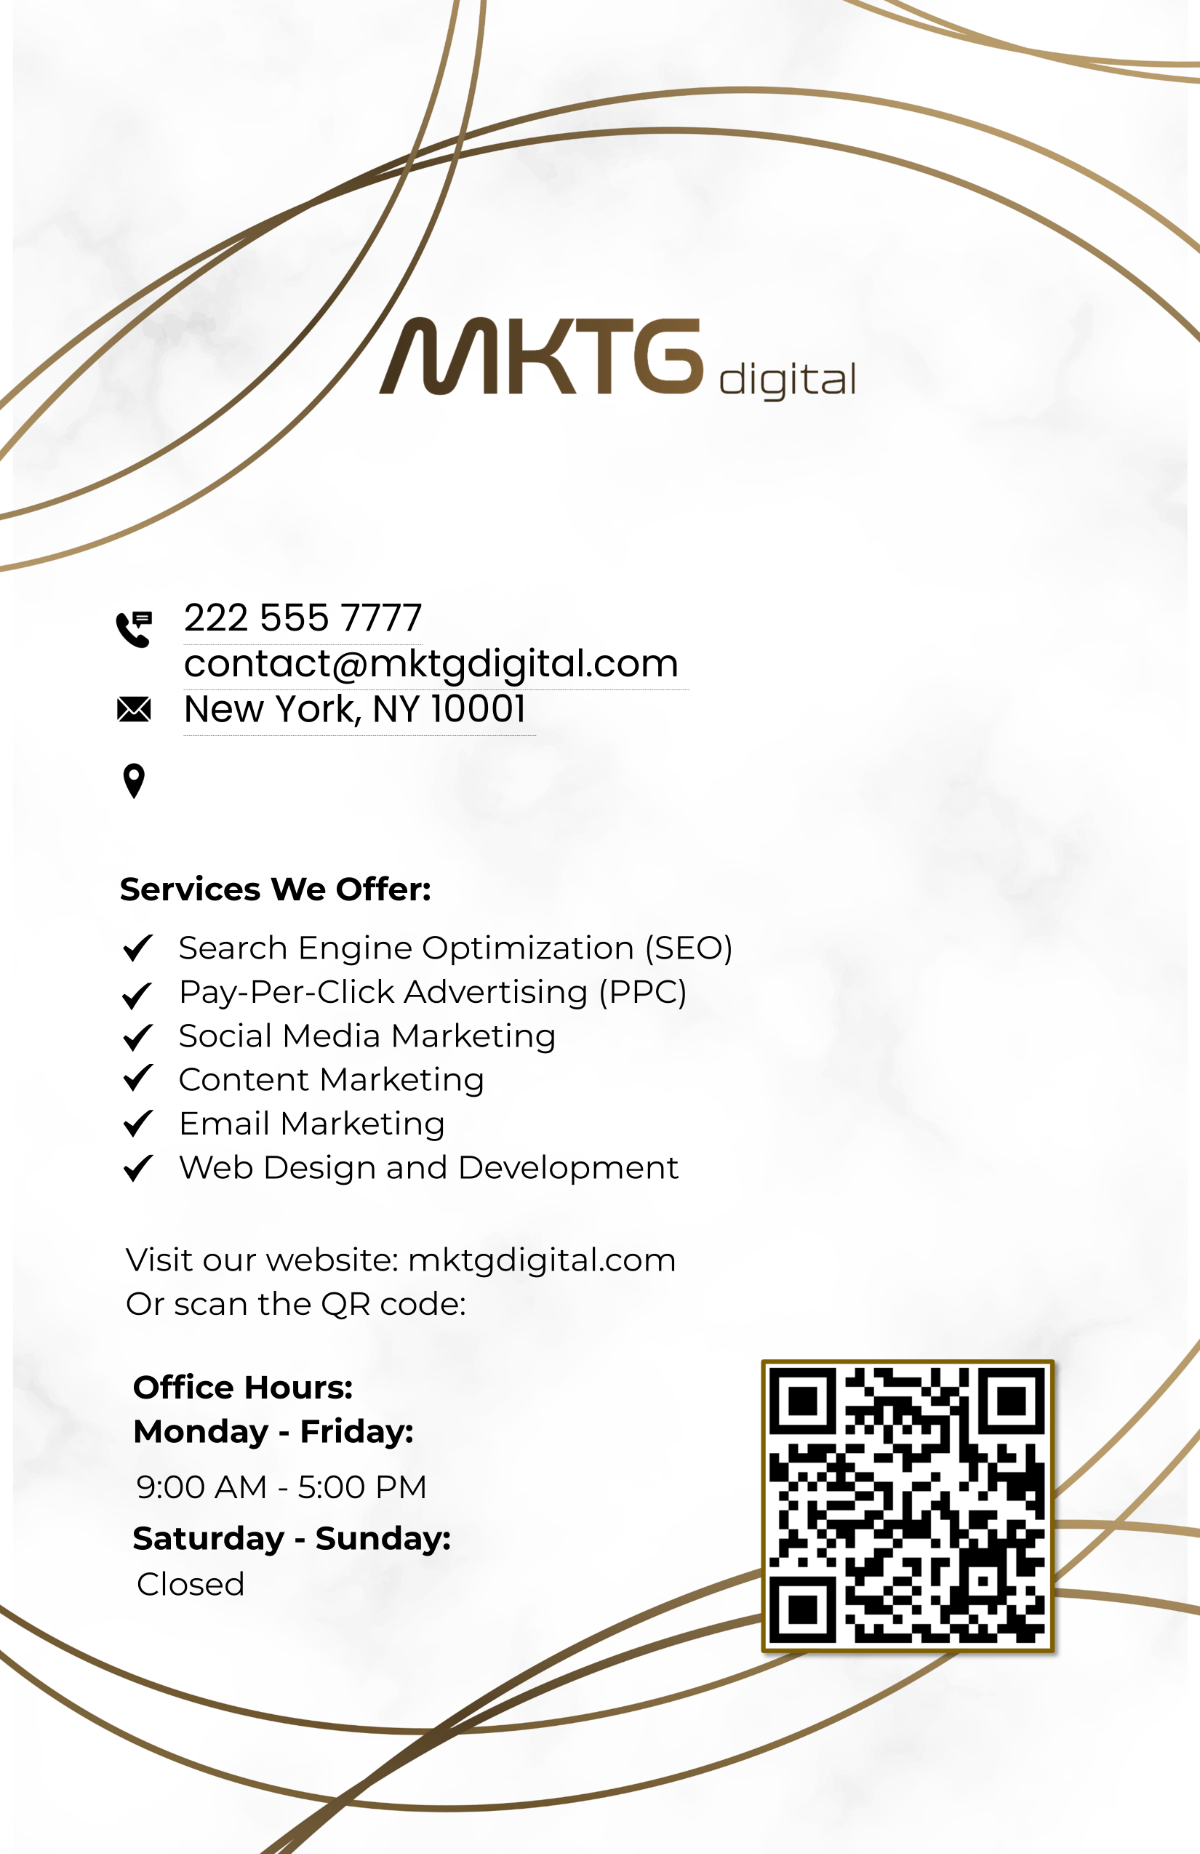 Free Digital Marketing Agency Reception Desk Signage Template